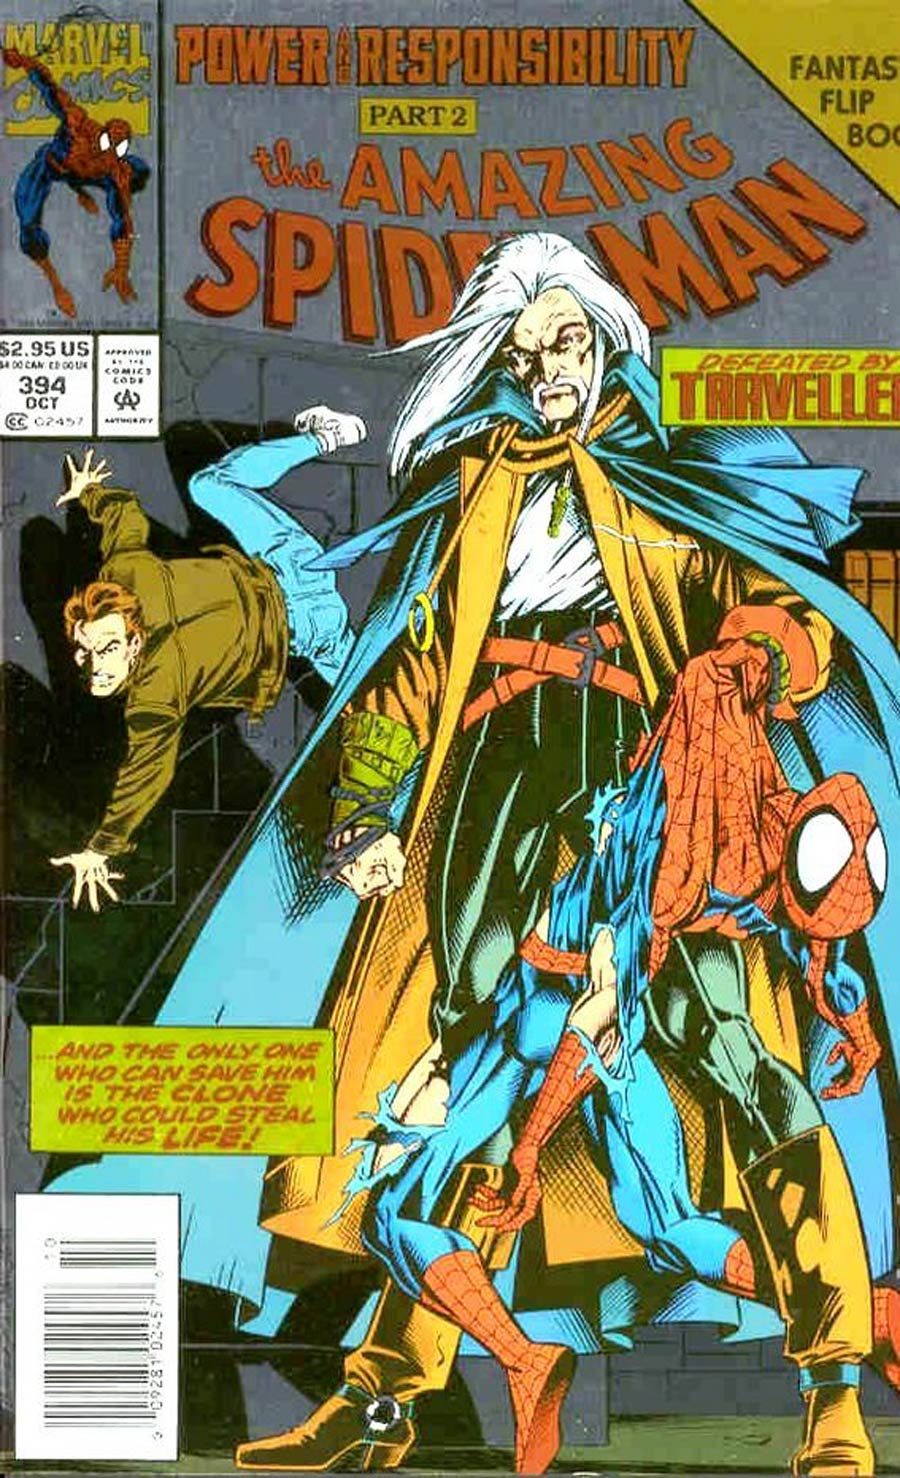 Amazing Spider-Man #394 Cover B Deluxe Flip Book